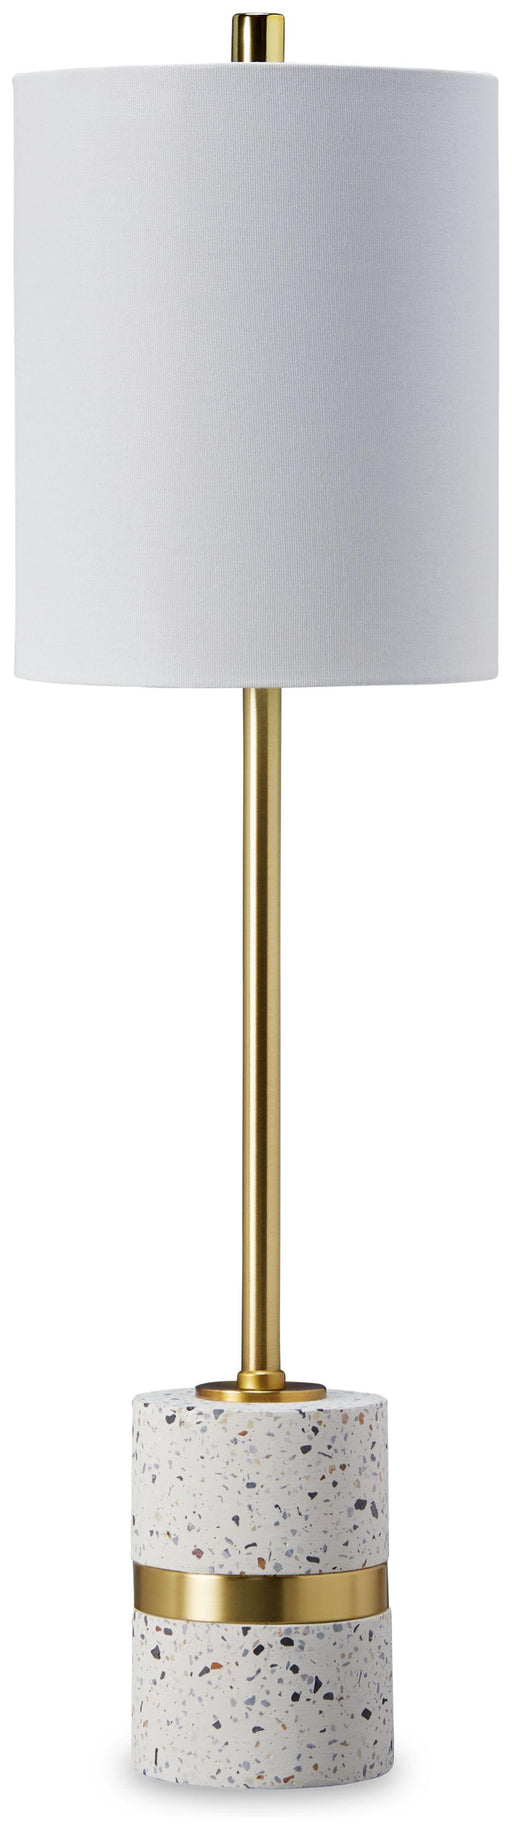 Ashley Maywick Metal Table Lamp (1/CN) - White/Brass Finish